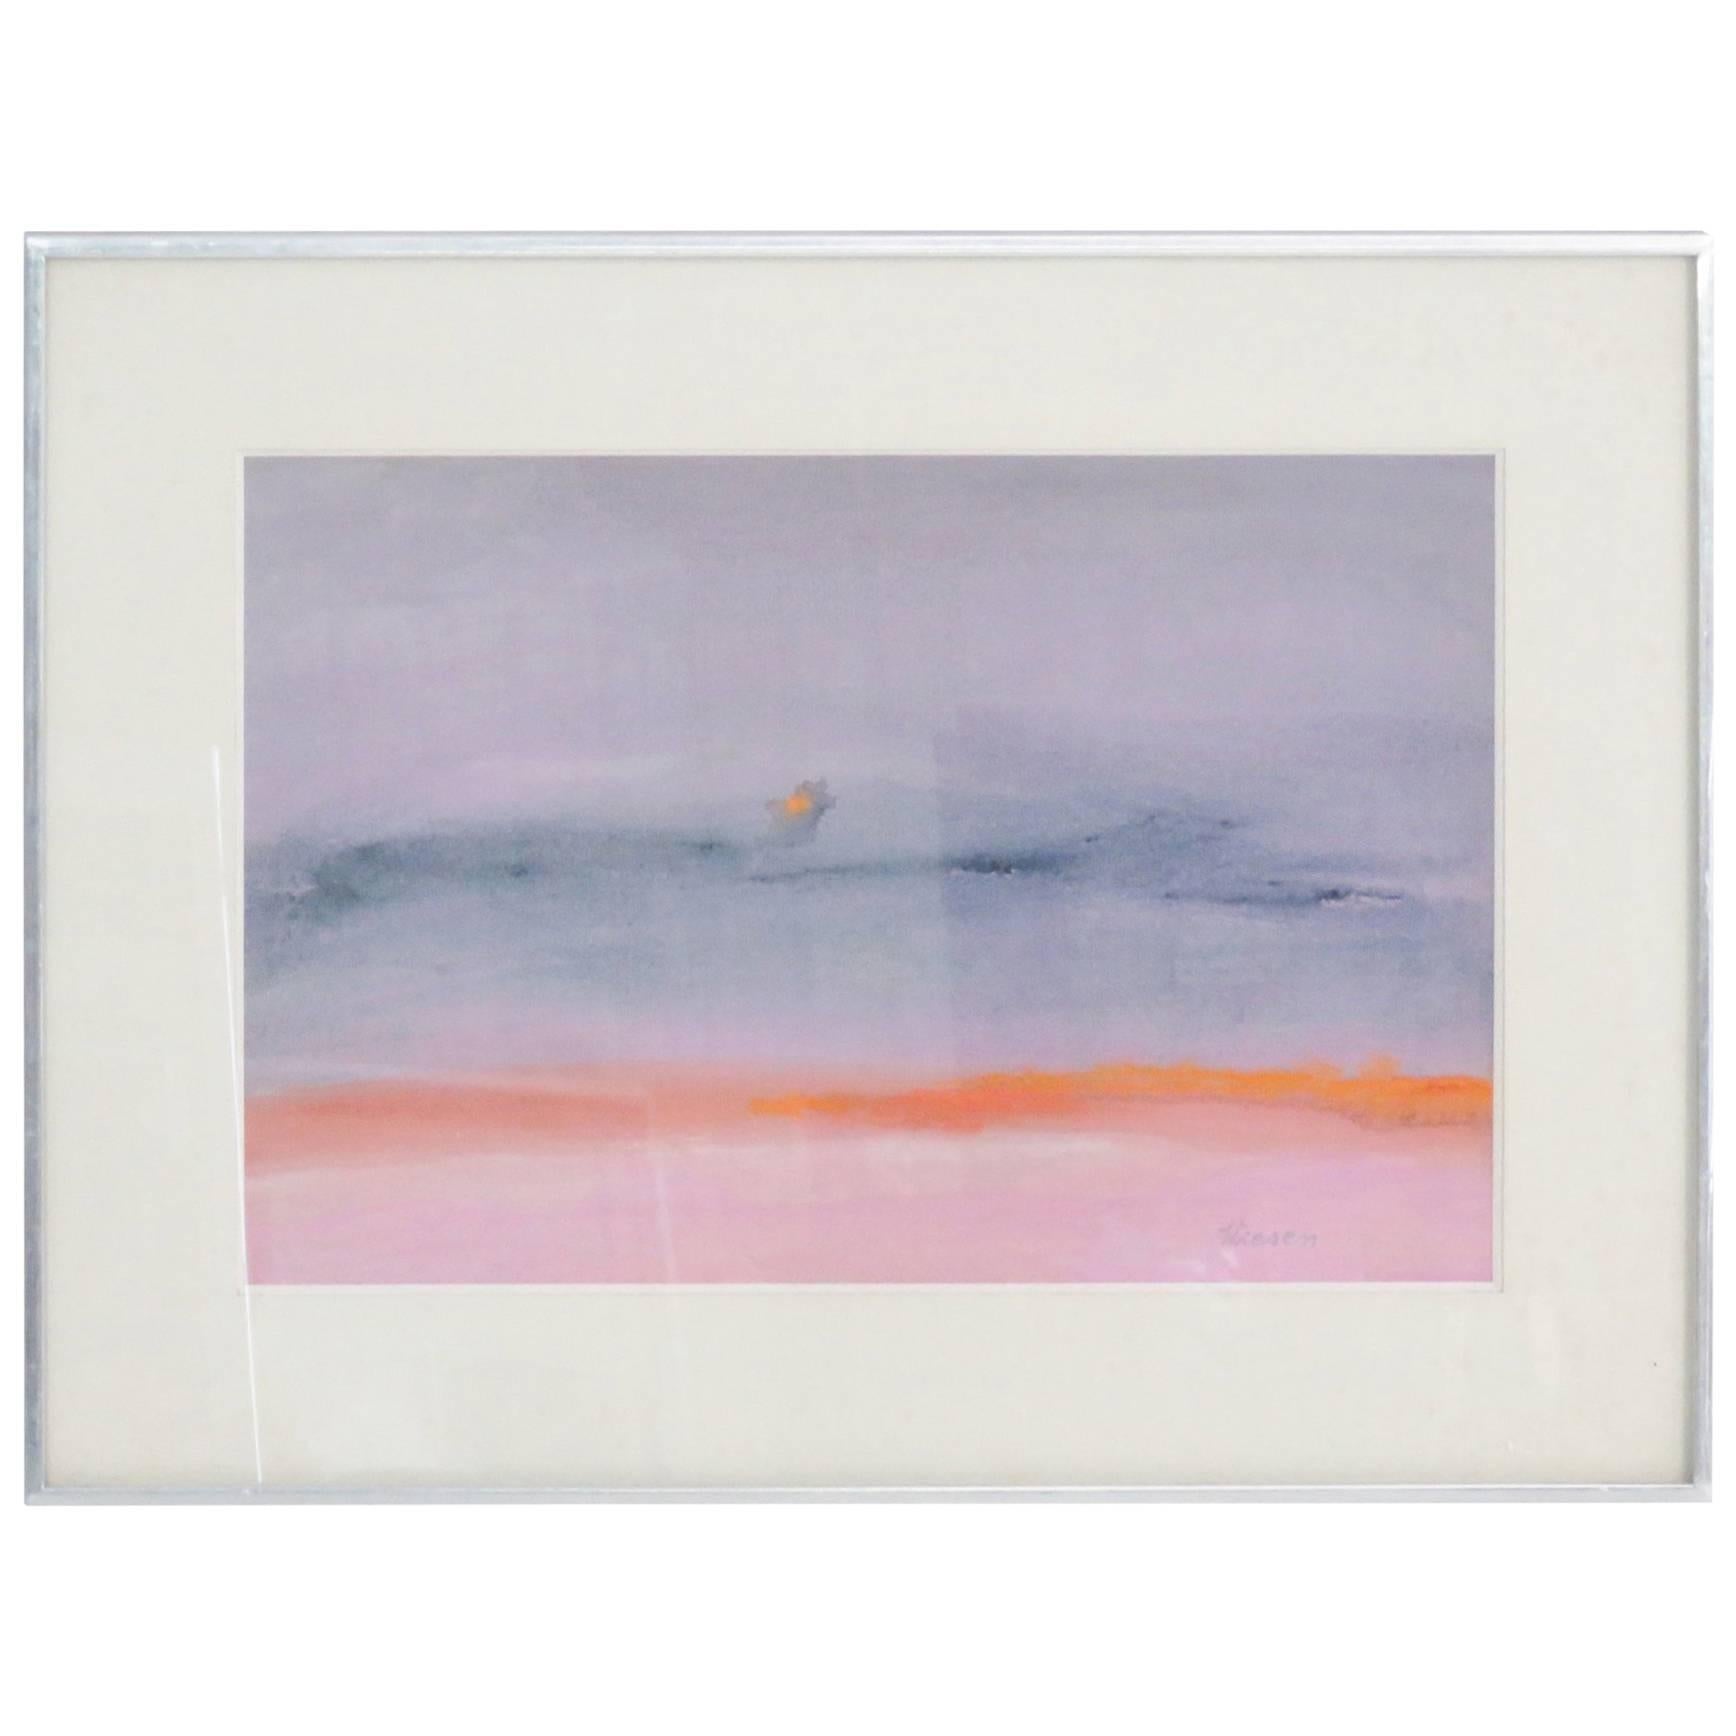 Wiesen Watercolor "Afterglow" For Sale